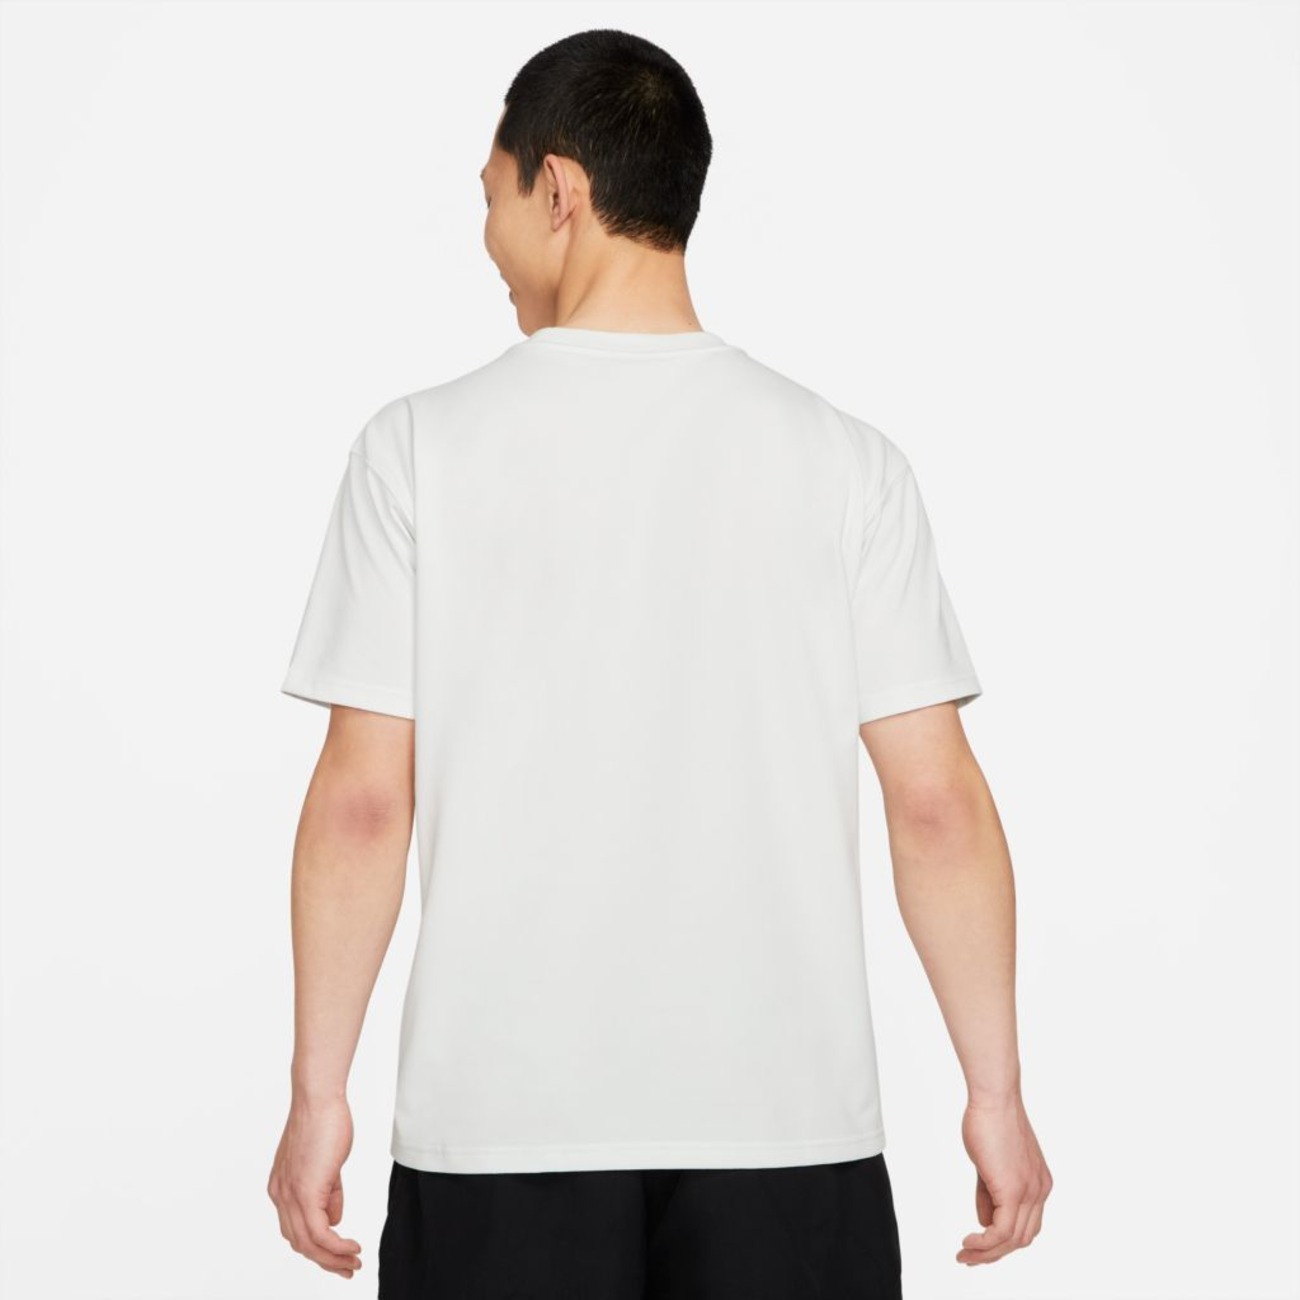 Camiseta Nike ACG Masculina - Foto 2